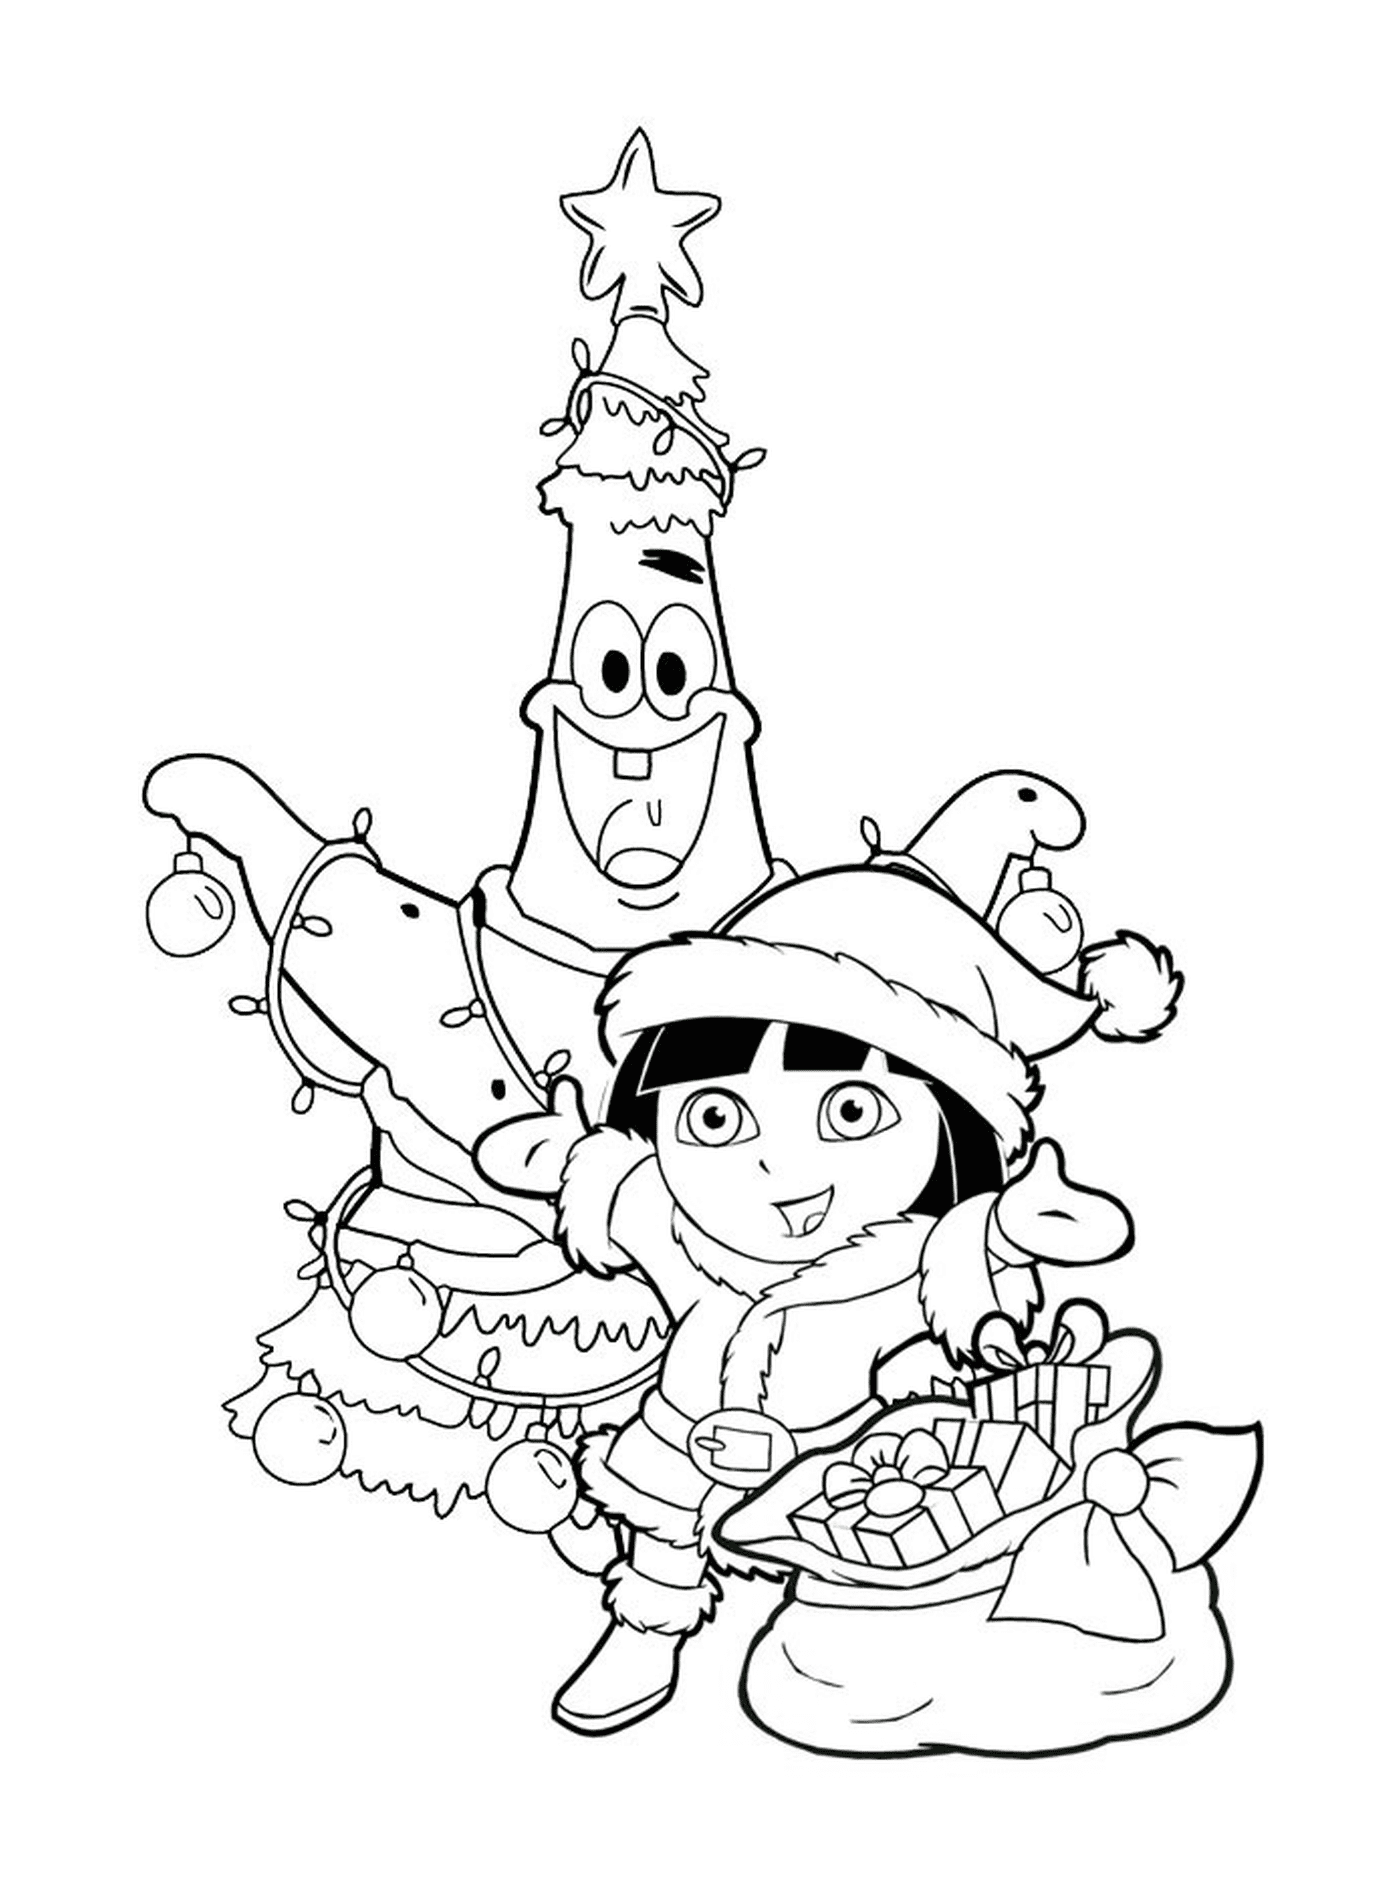   Dora célèbre Noël avec Patrick 